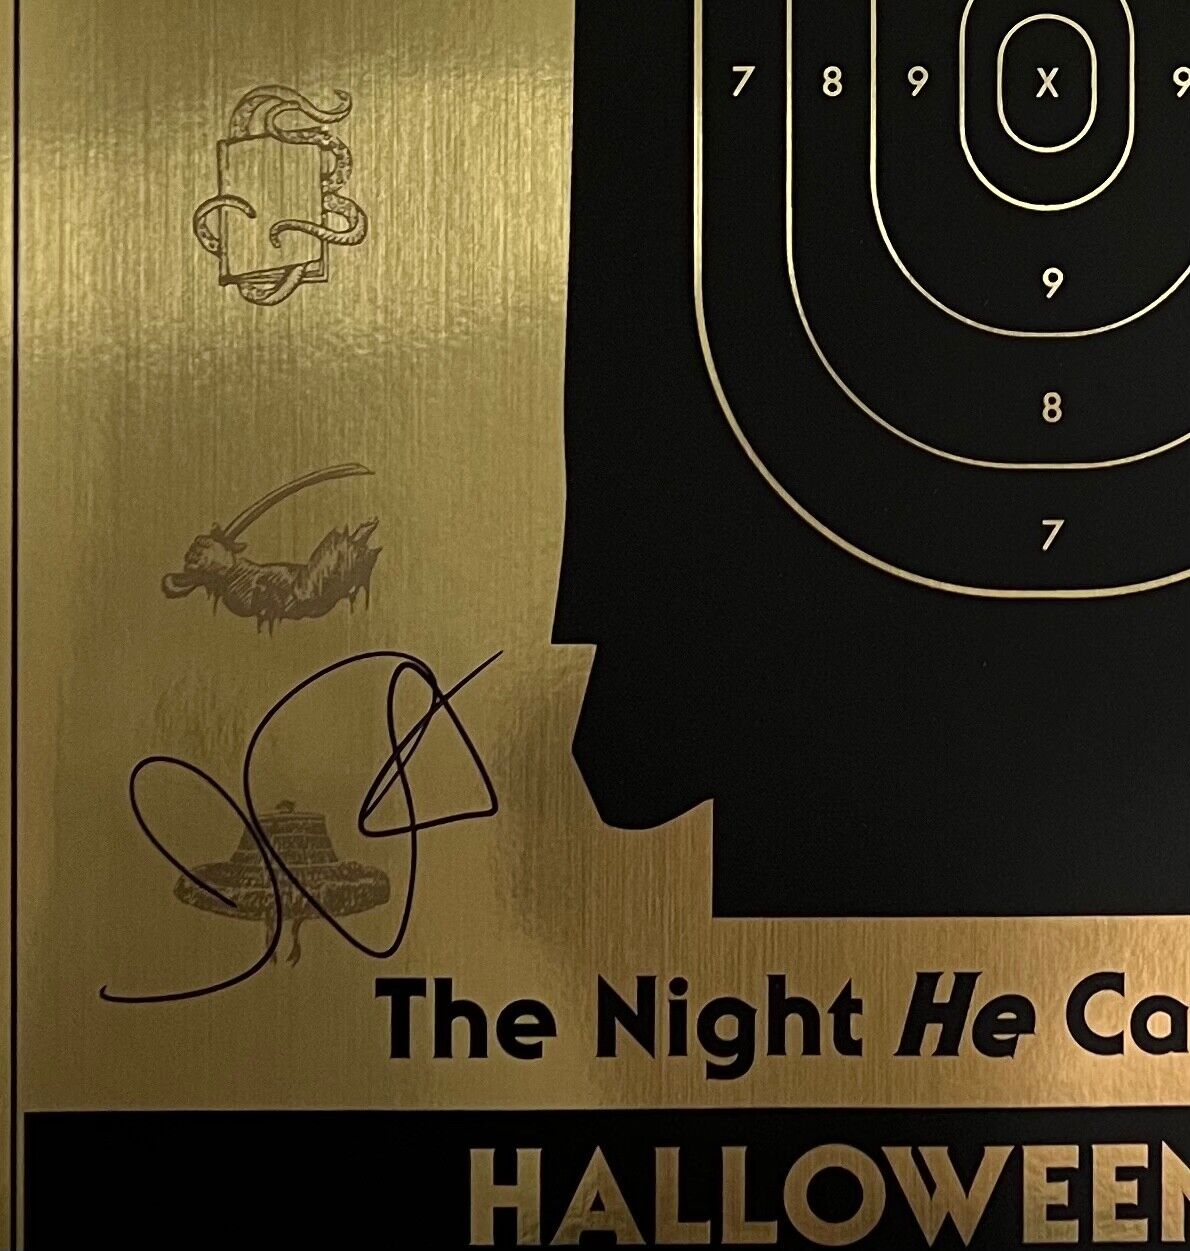 John Carpenter Live JSA Signed Autographed Halloween Lithograph Poster